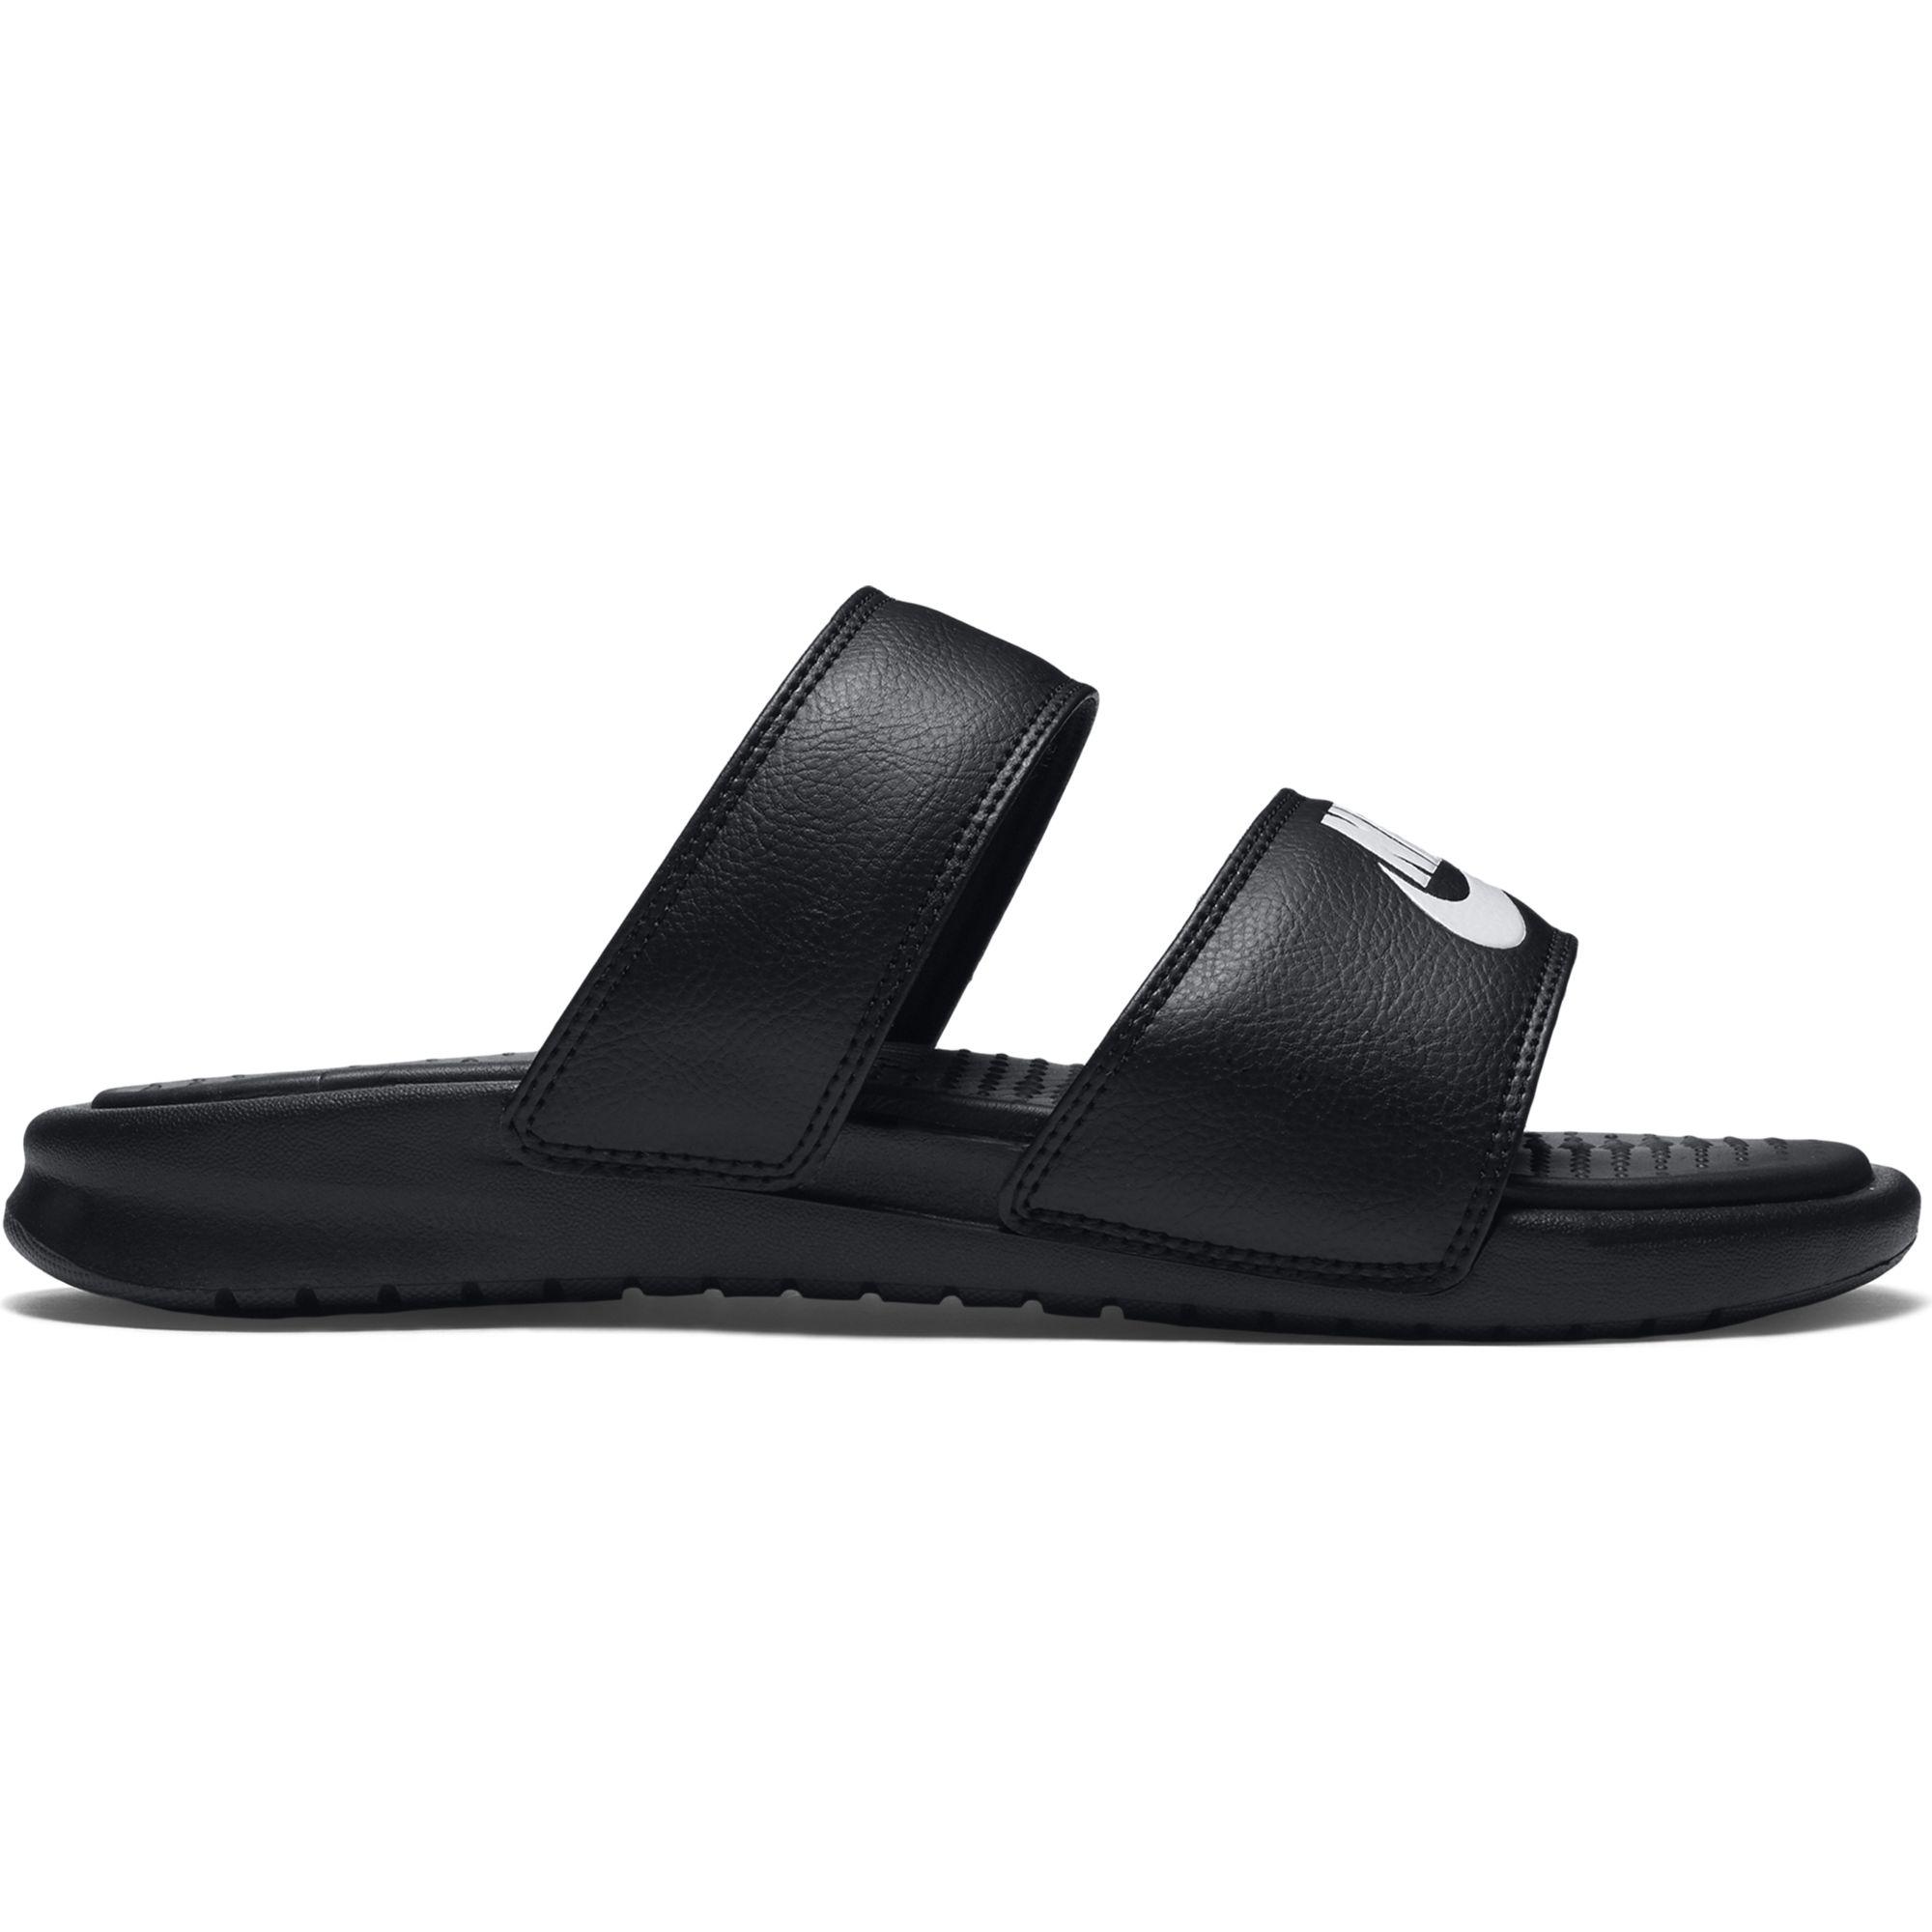  Nike  Benassi  Duo Ultra Slide  Sandal  Black White 